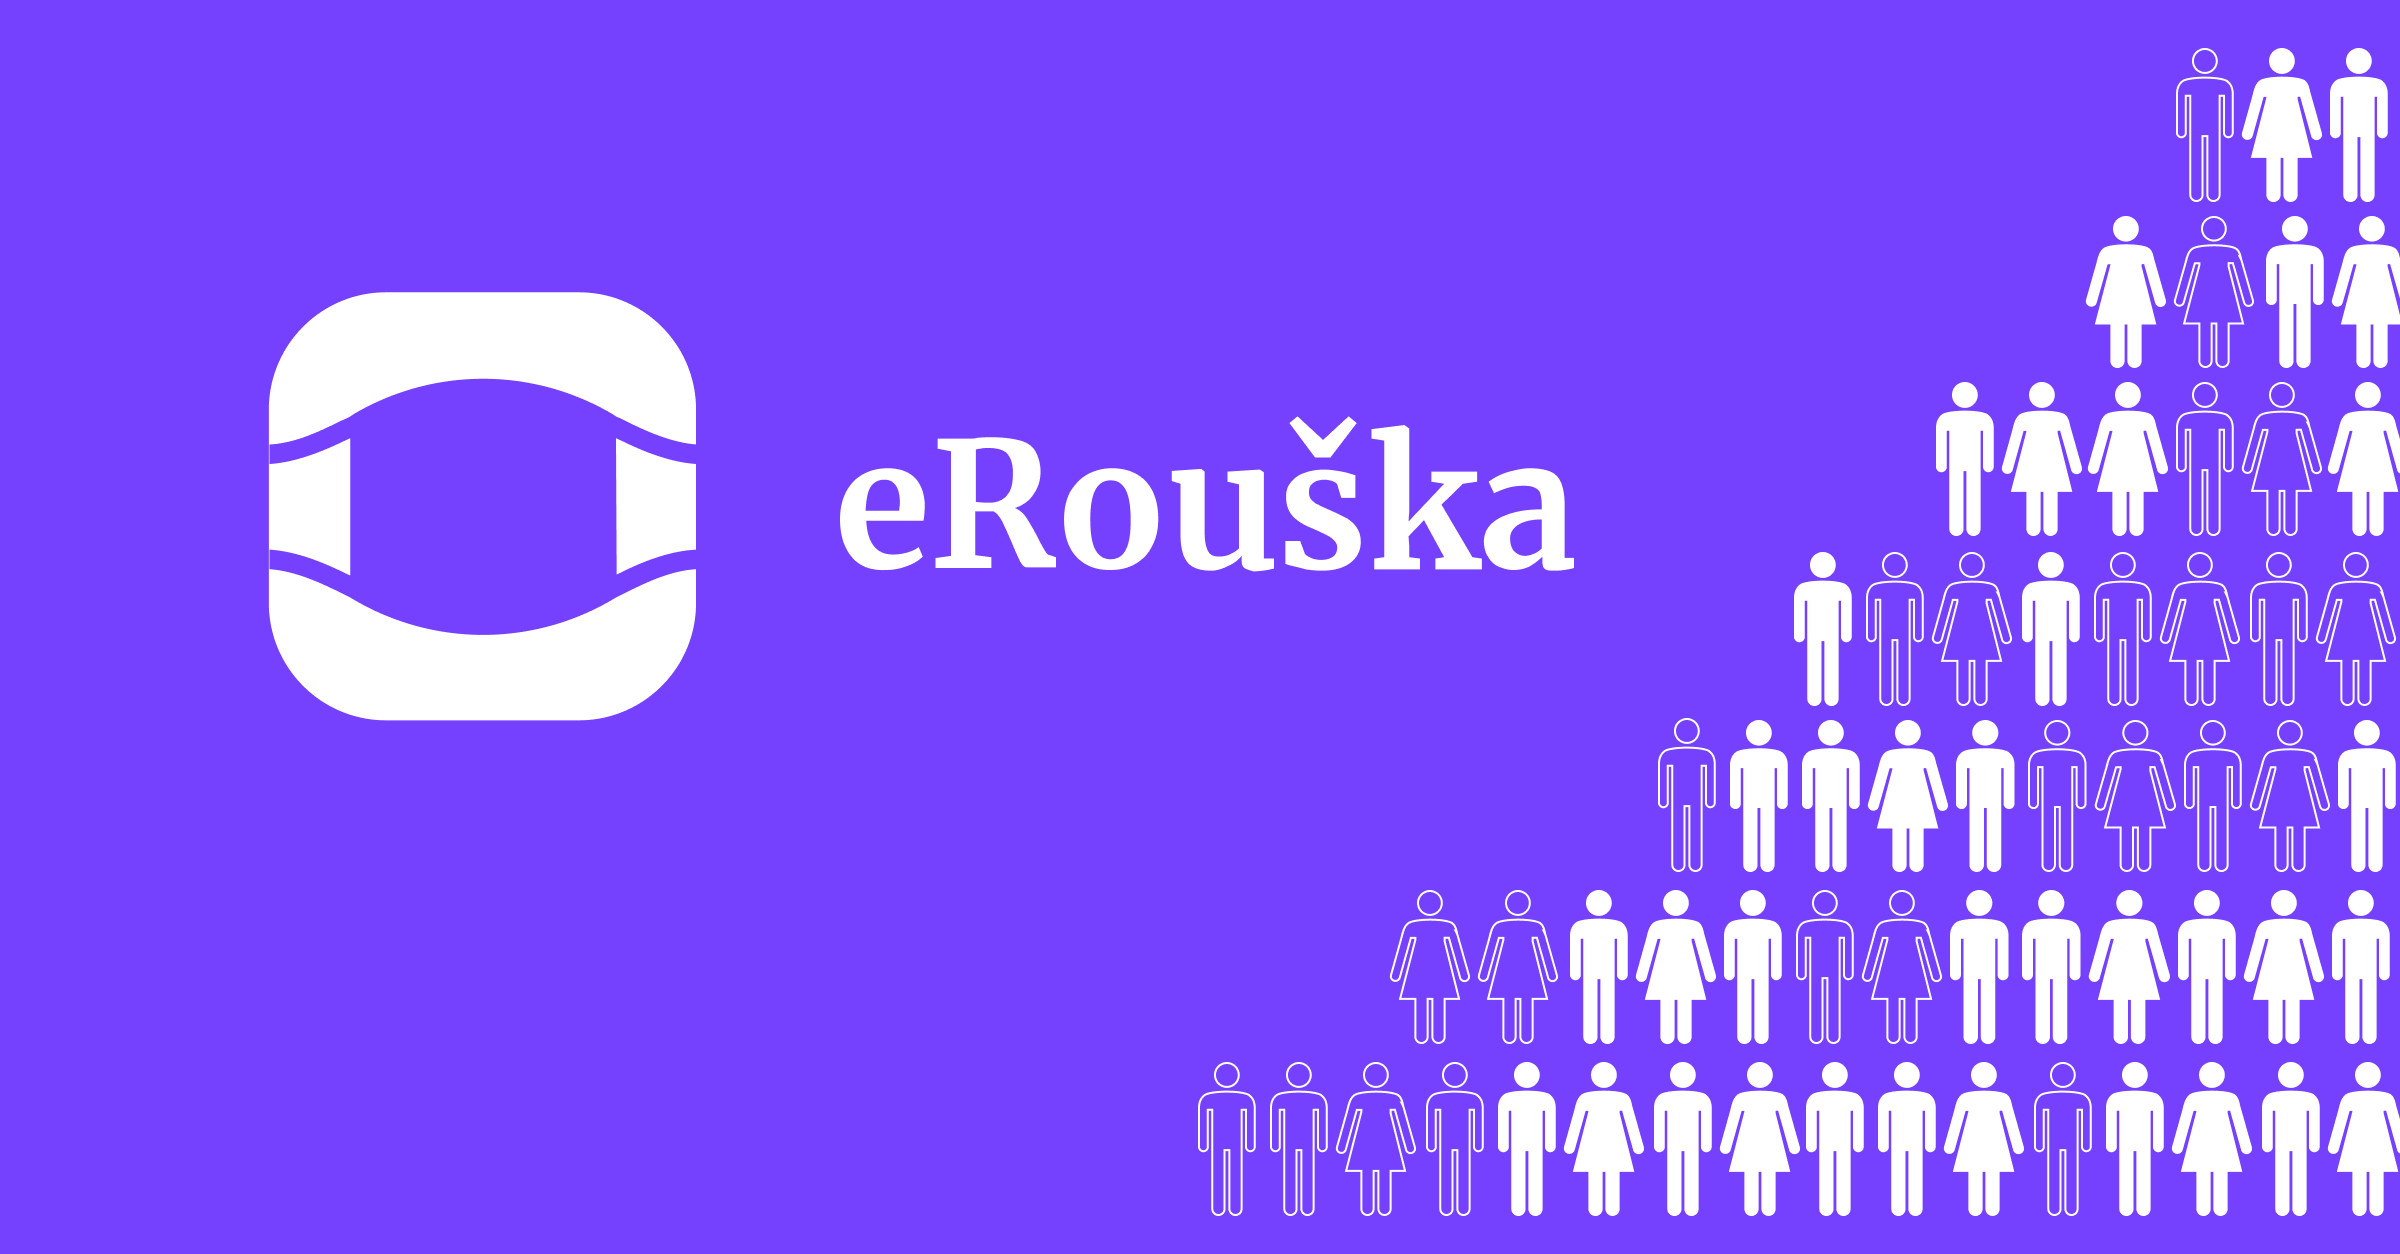 The Operation optimisation of eRouška tracking app through GCP